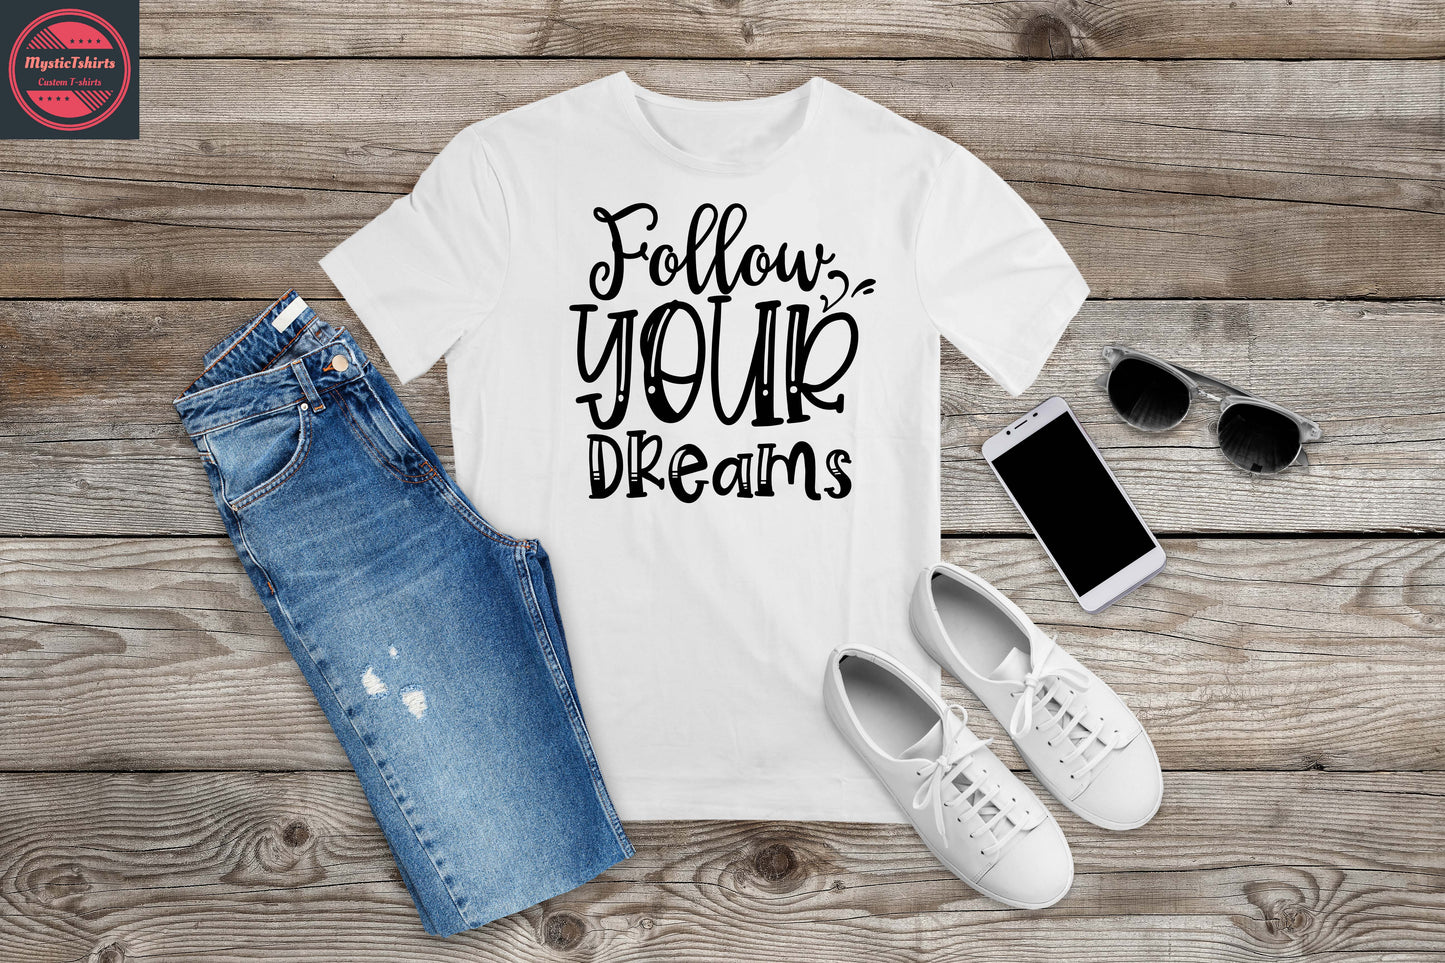 149. FOLLOW YOUR DREAMS, Custom Made Shirt, Personalized T-Shirt, Custom Text, Make Your Own Shirt, Custom Tee